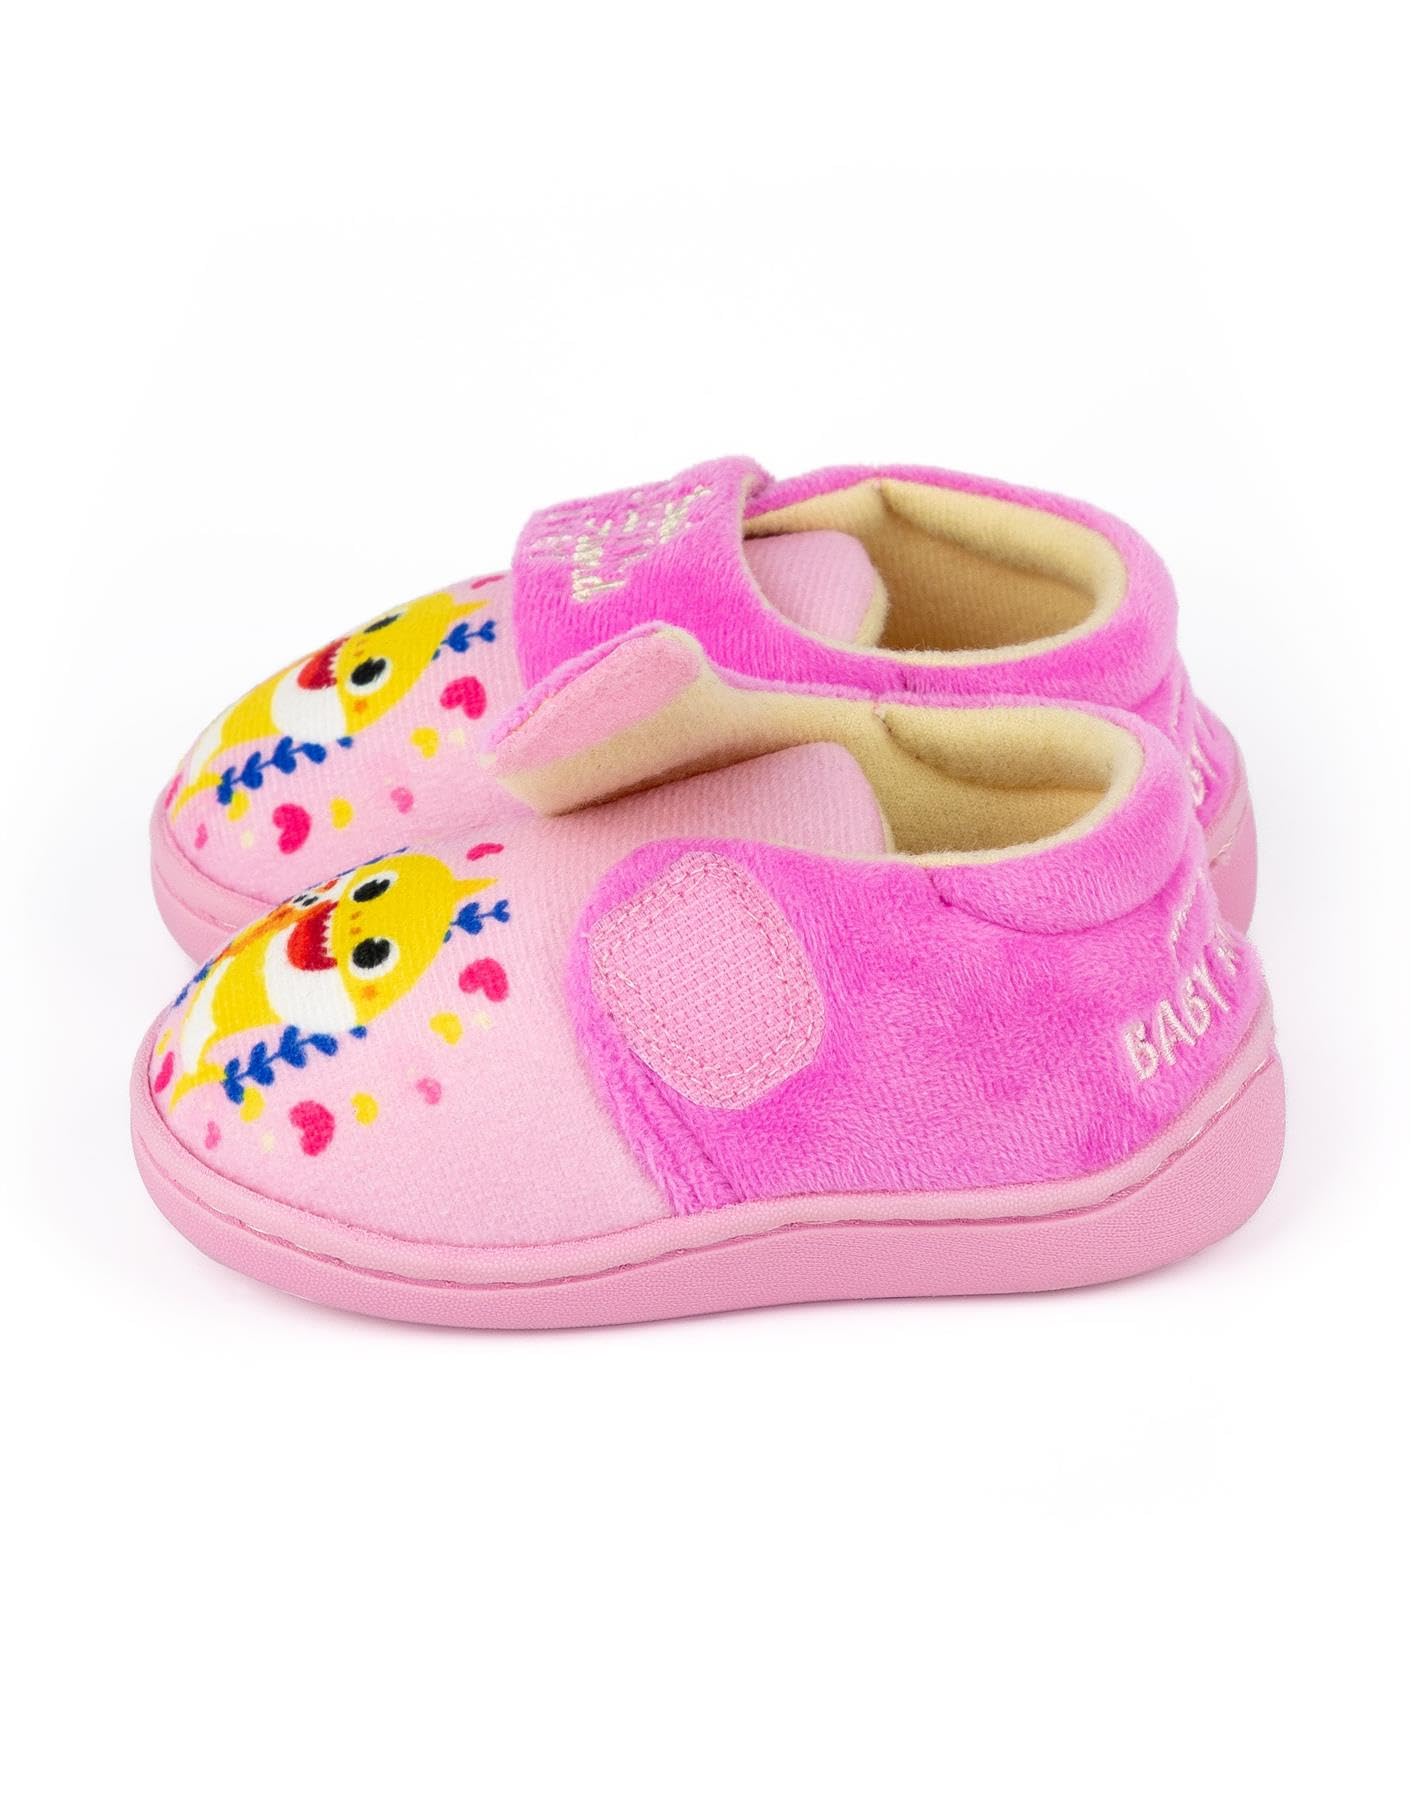 Baby Shark Girls Slippers | Kids Pink Best Shark Friend Ever Footwear with Adjustable Strap | Slip On House Shoes Loungewear